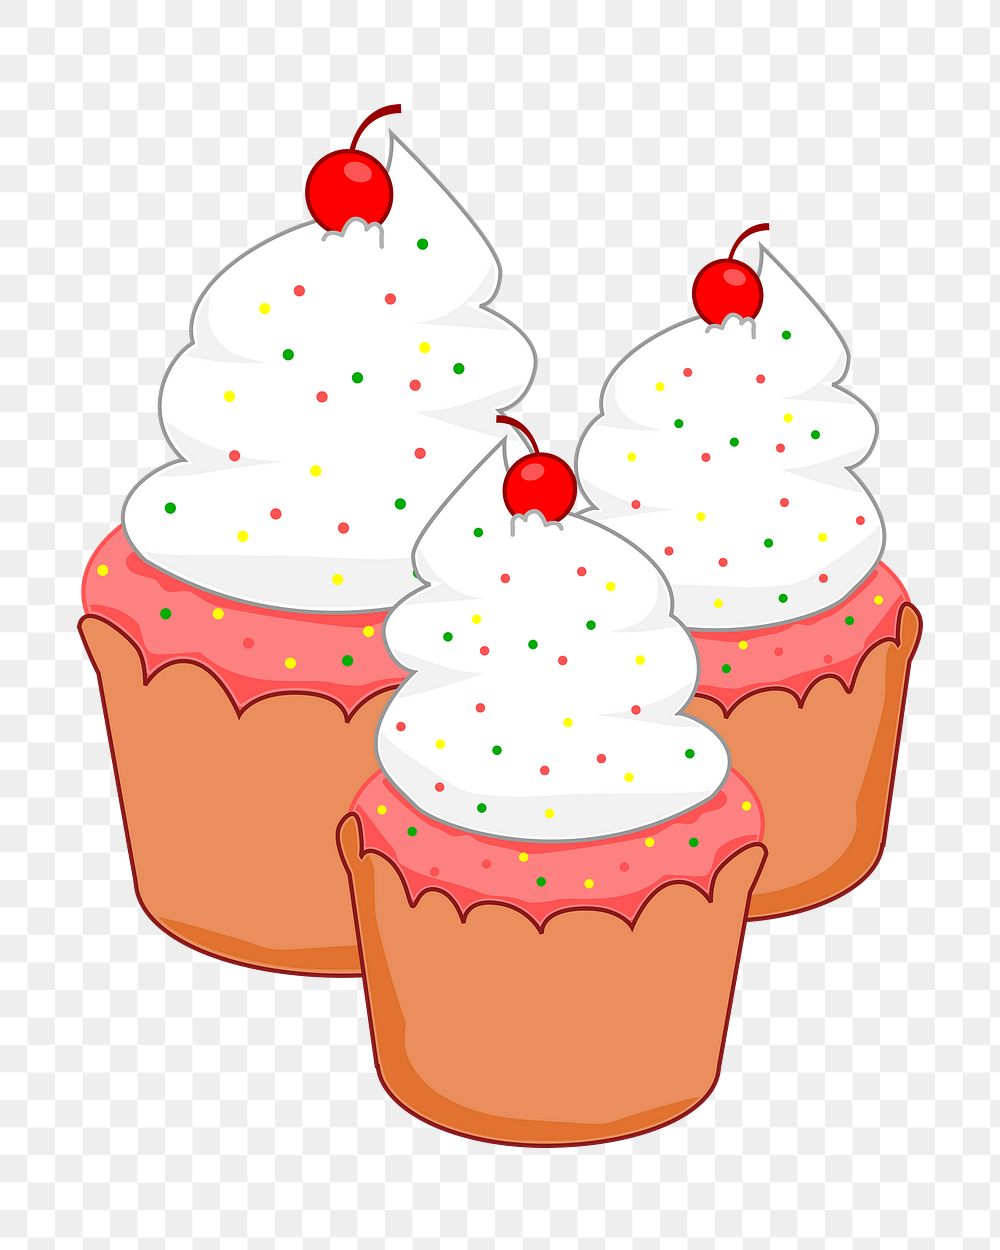 Cupcakes png illustration, transparent background. Free public domain CC0 image.